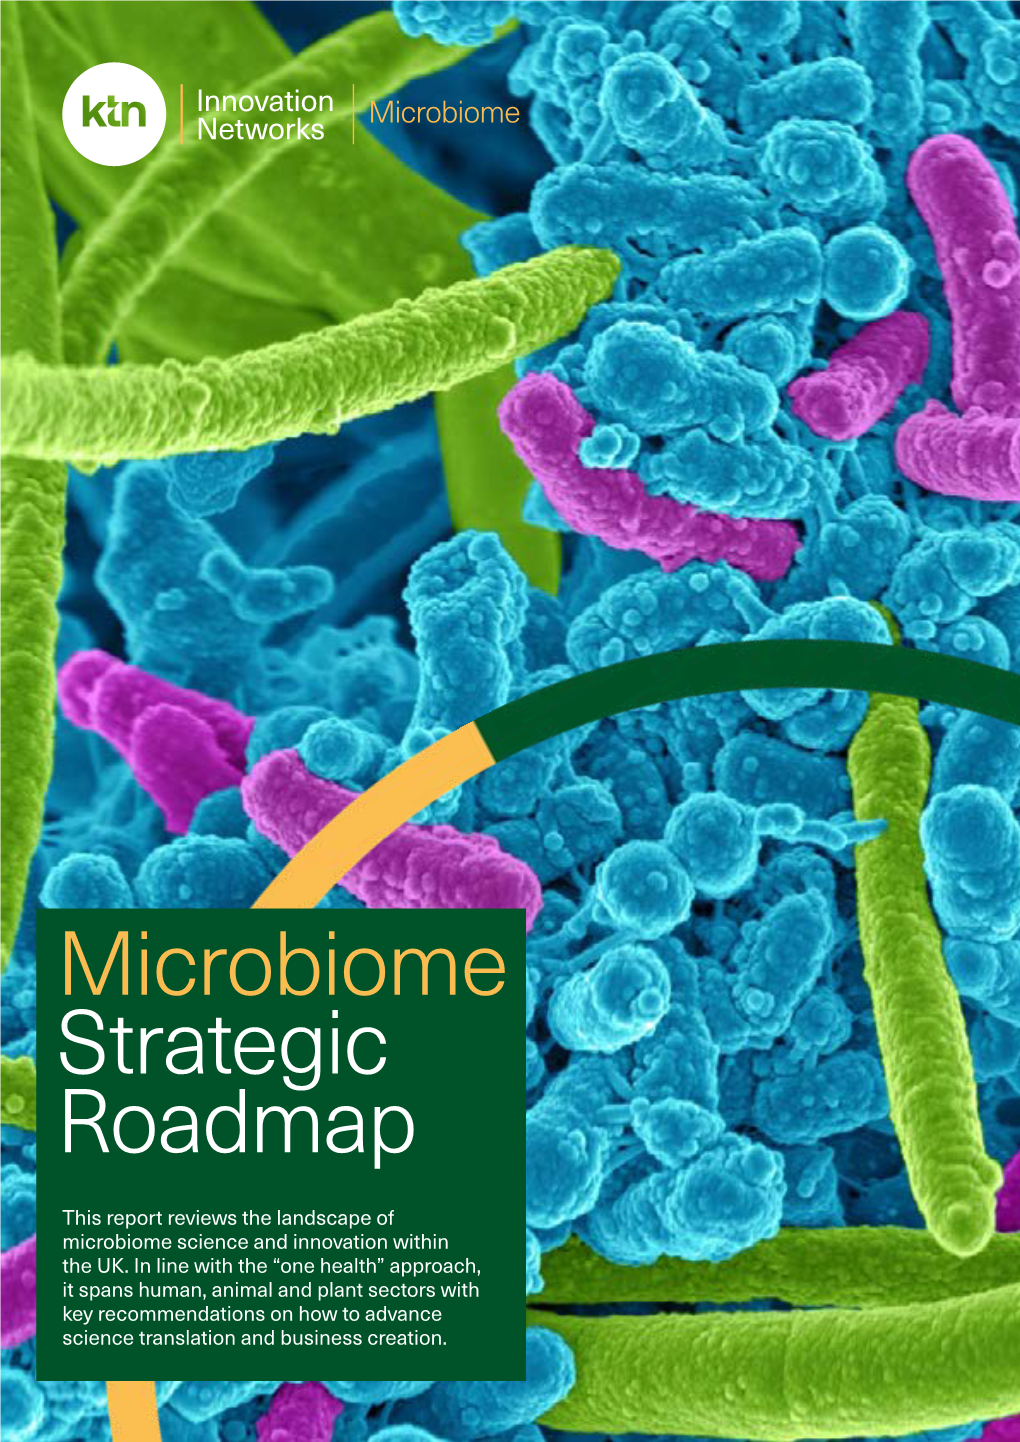 KTN Microbiome Strategic Roadmap